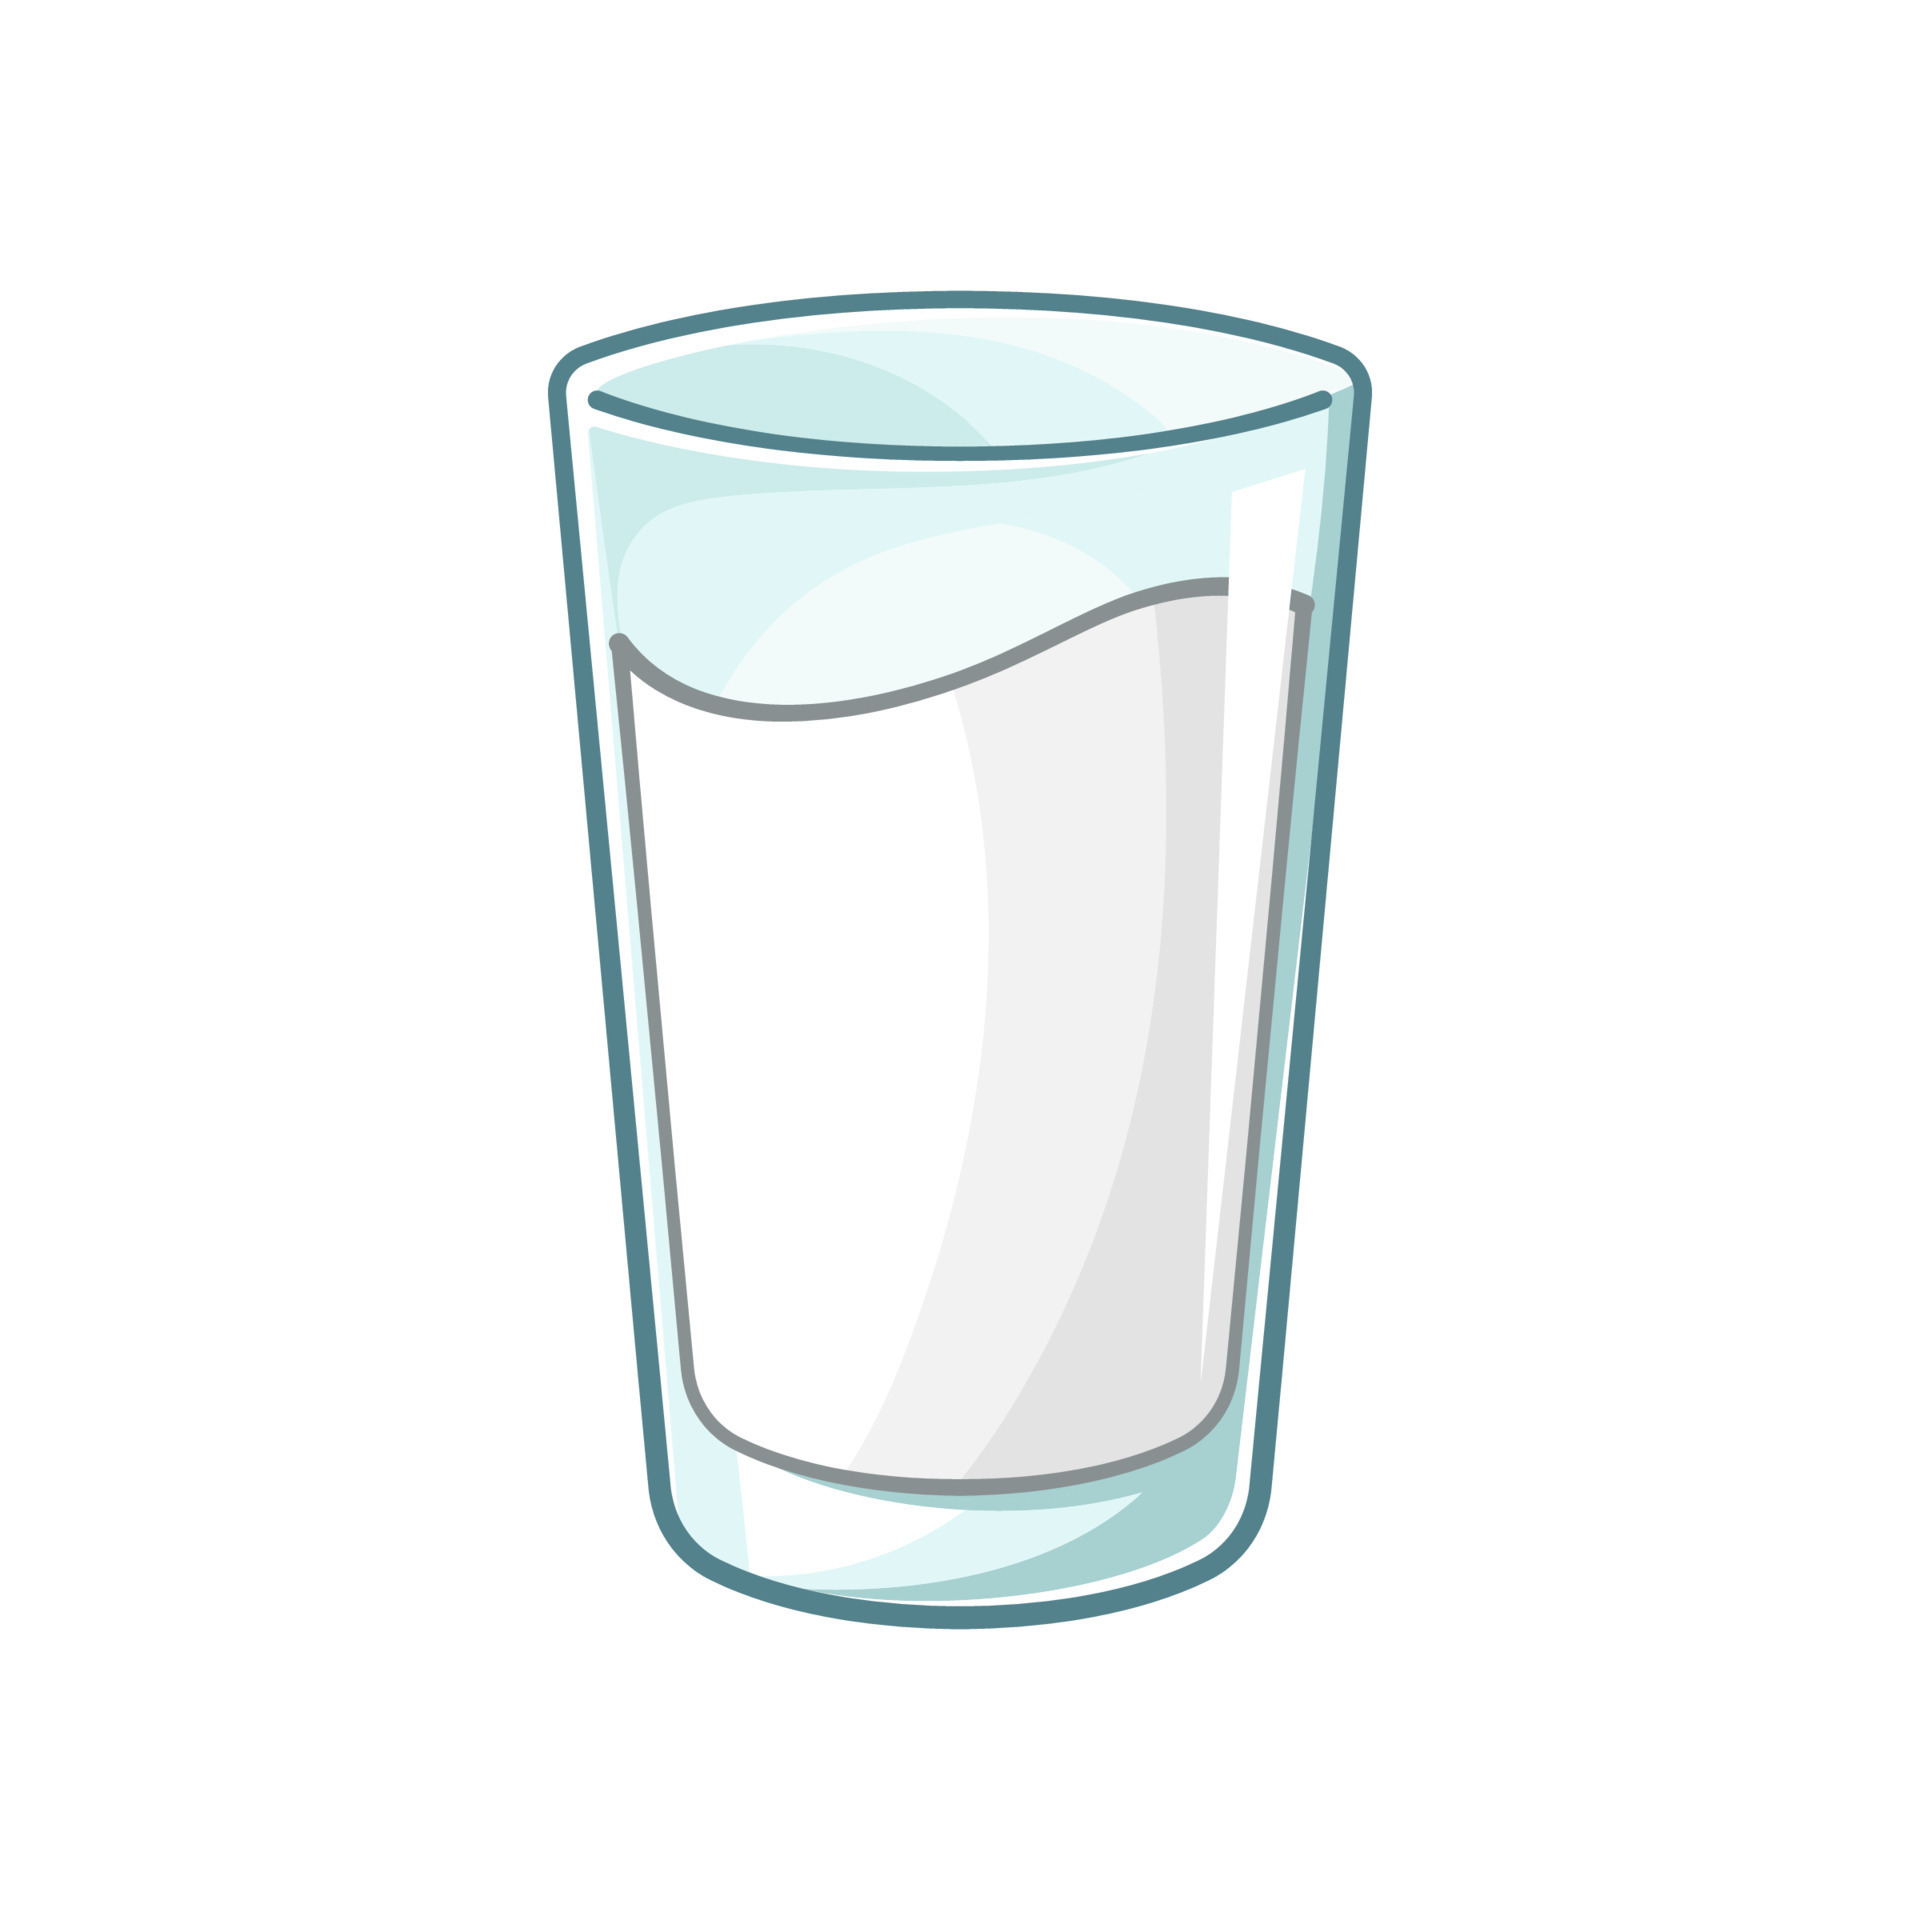 Tall glass of milk clipart element. Cute simple flat vector illustration  design. Vanilla milk flavor yogurt dairy drink print, sign, symbol.  16461354 Vector Art at Vecteezy